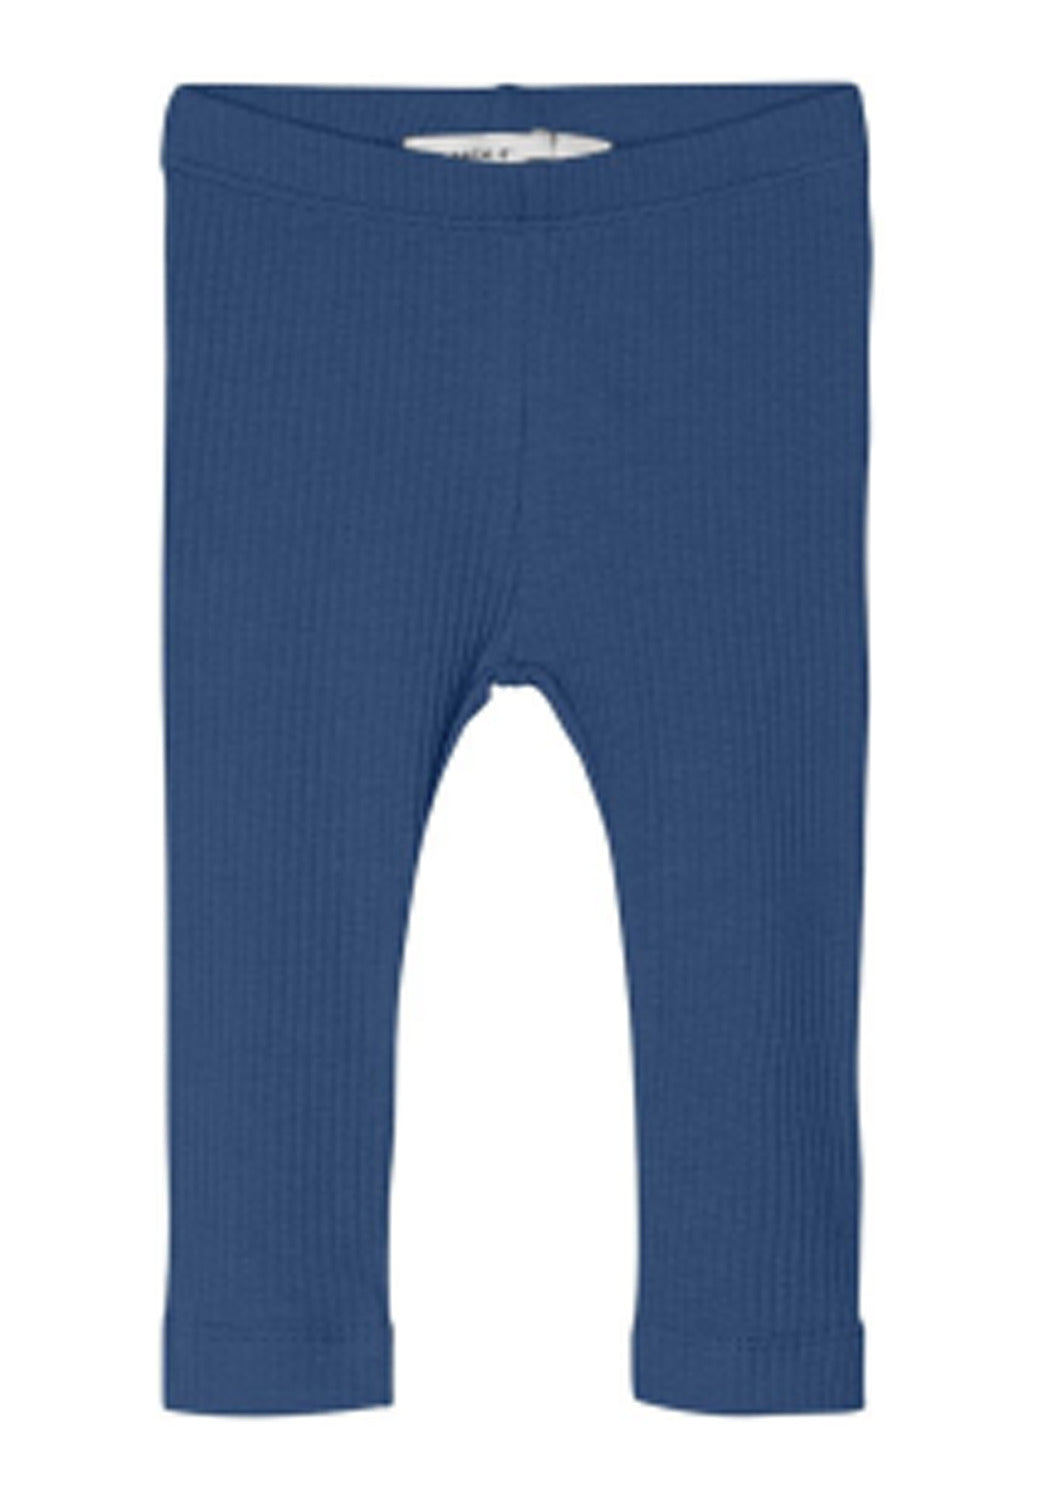 NBNKAB Pants - Bijou Blue